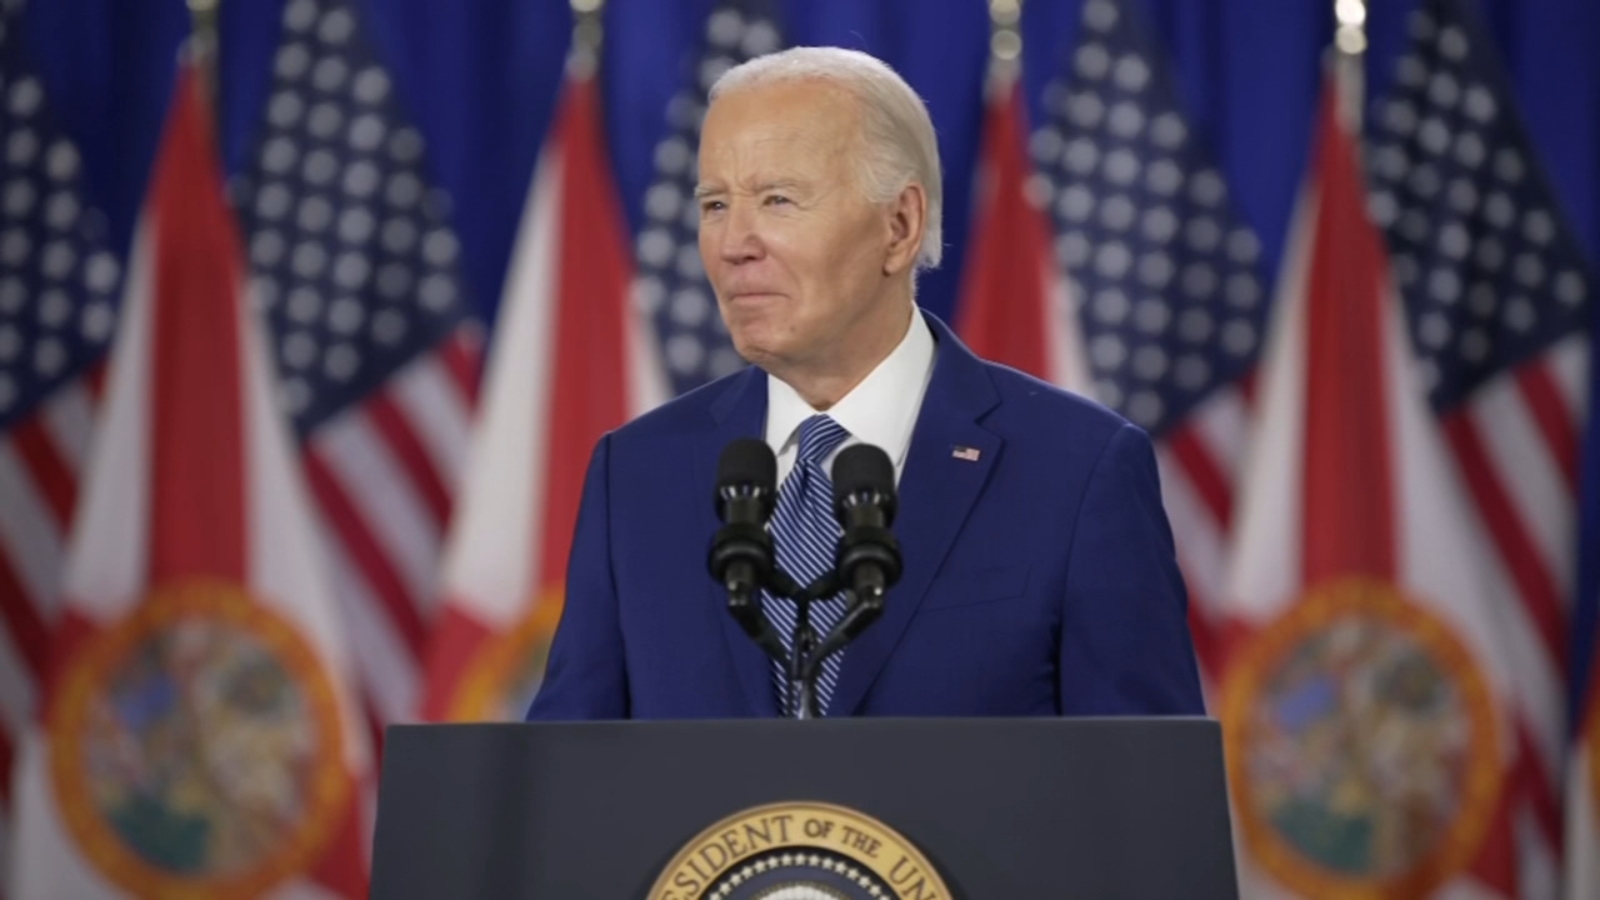 President Joe Biden to visit families of officers killed in Charlotte